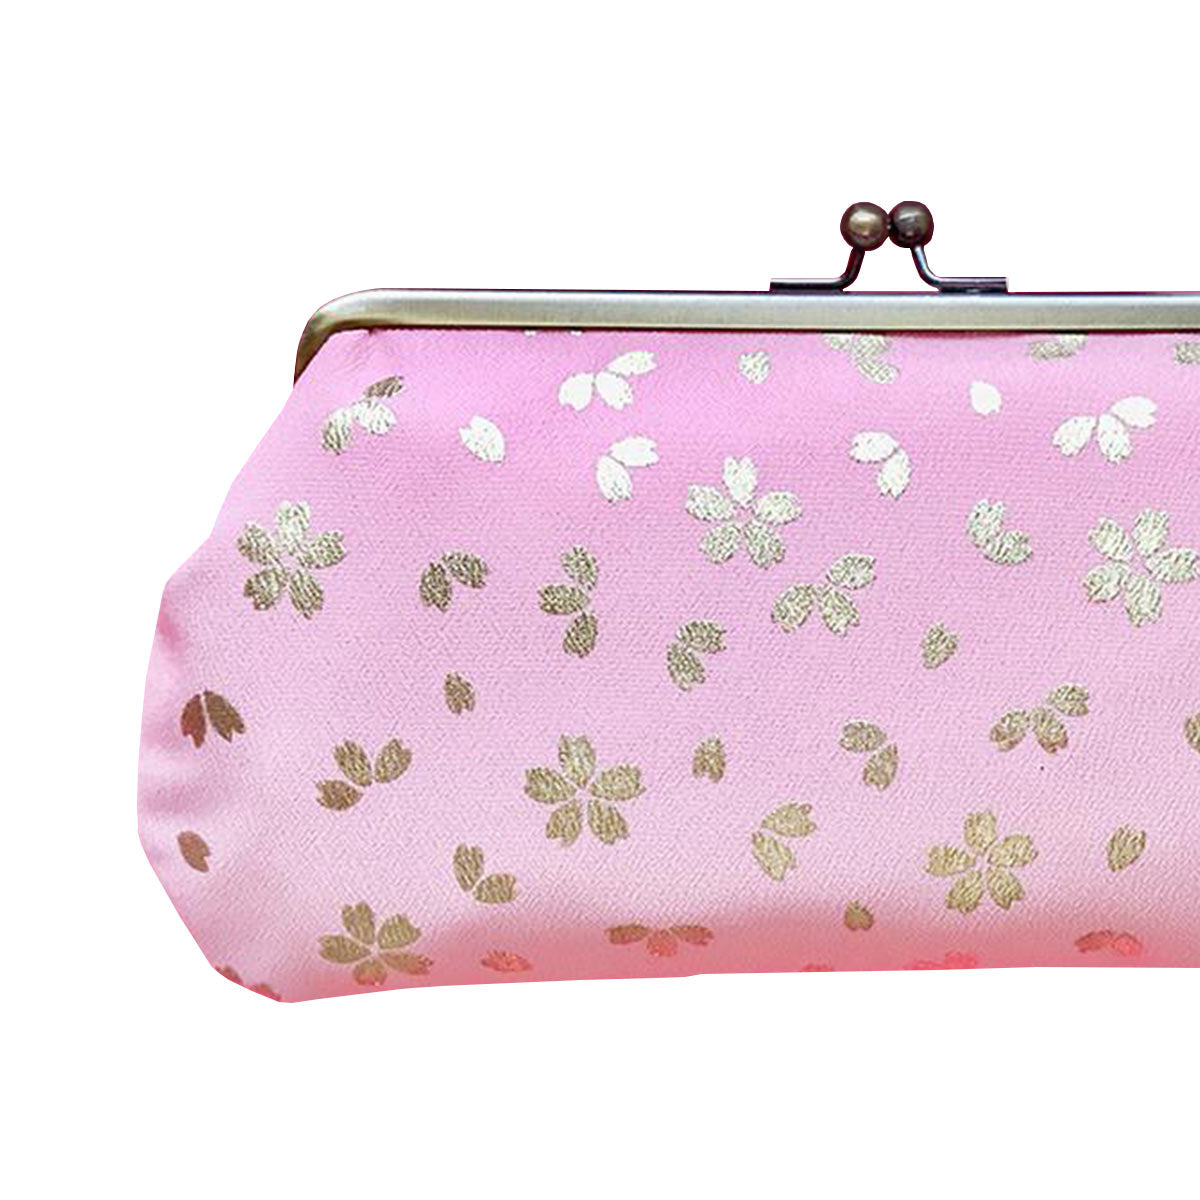 Alternate image of Chidoriya Pink + Gold Kimono Clutch Bag 8.5 x 4  inches Bag